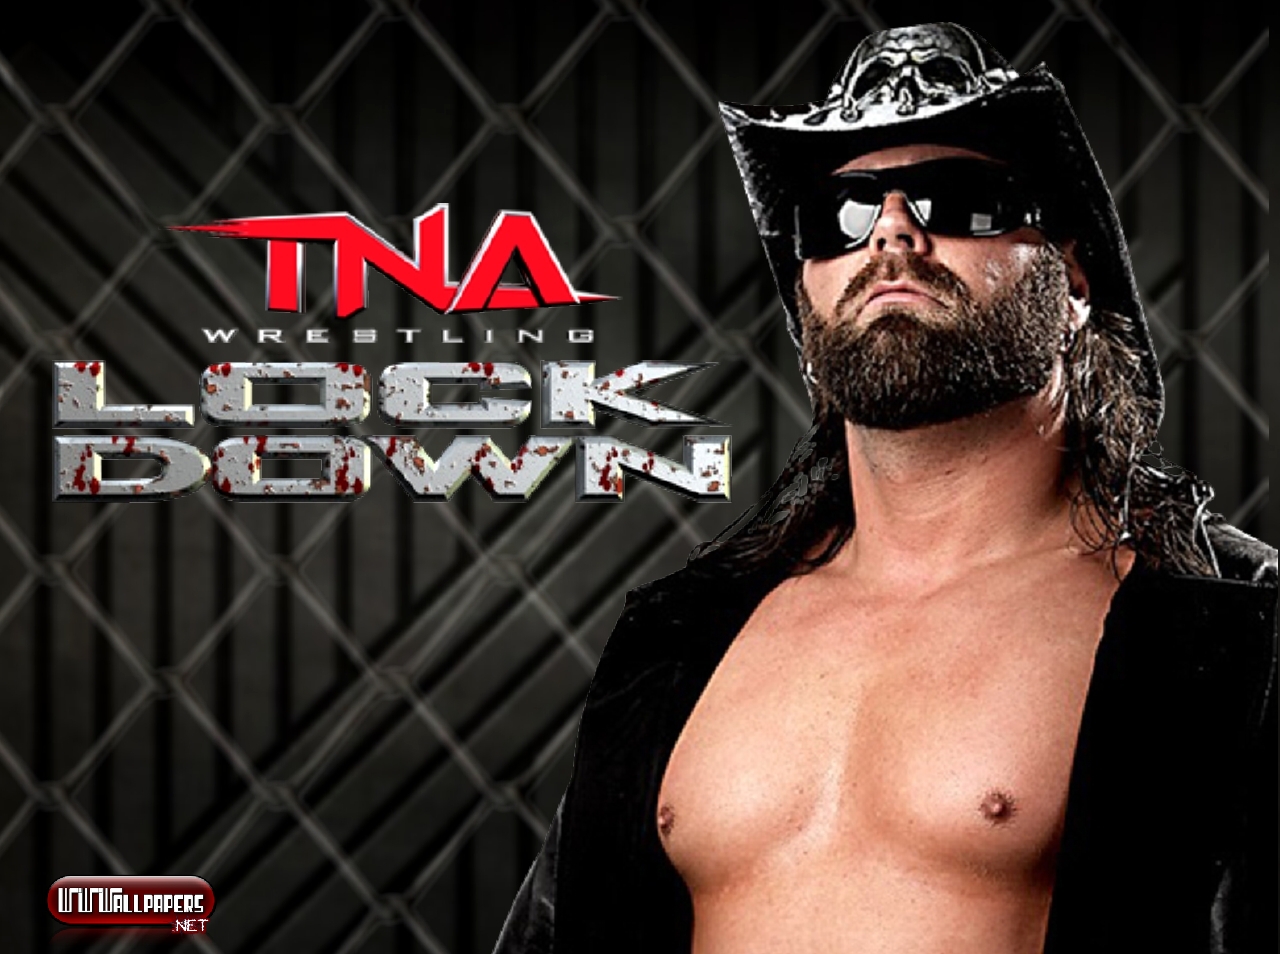 Wwe русская версия от 545tv. WWE на русском. TNA 1/2. TNA дискография. Реслинг от 545 ТВ.